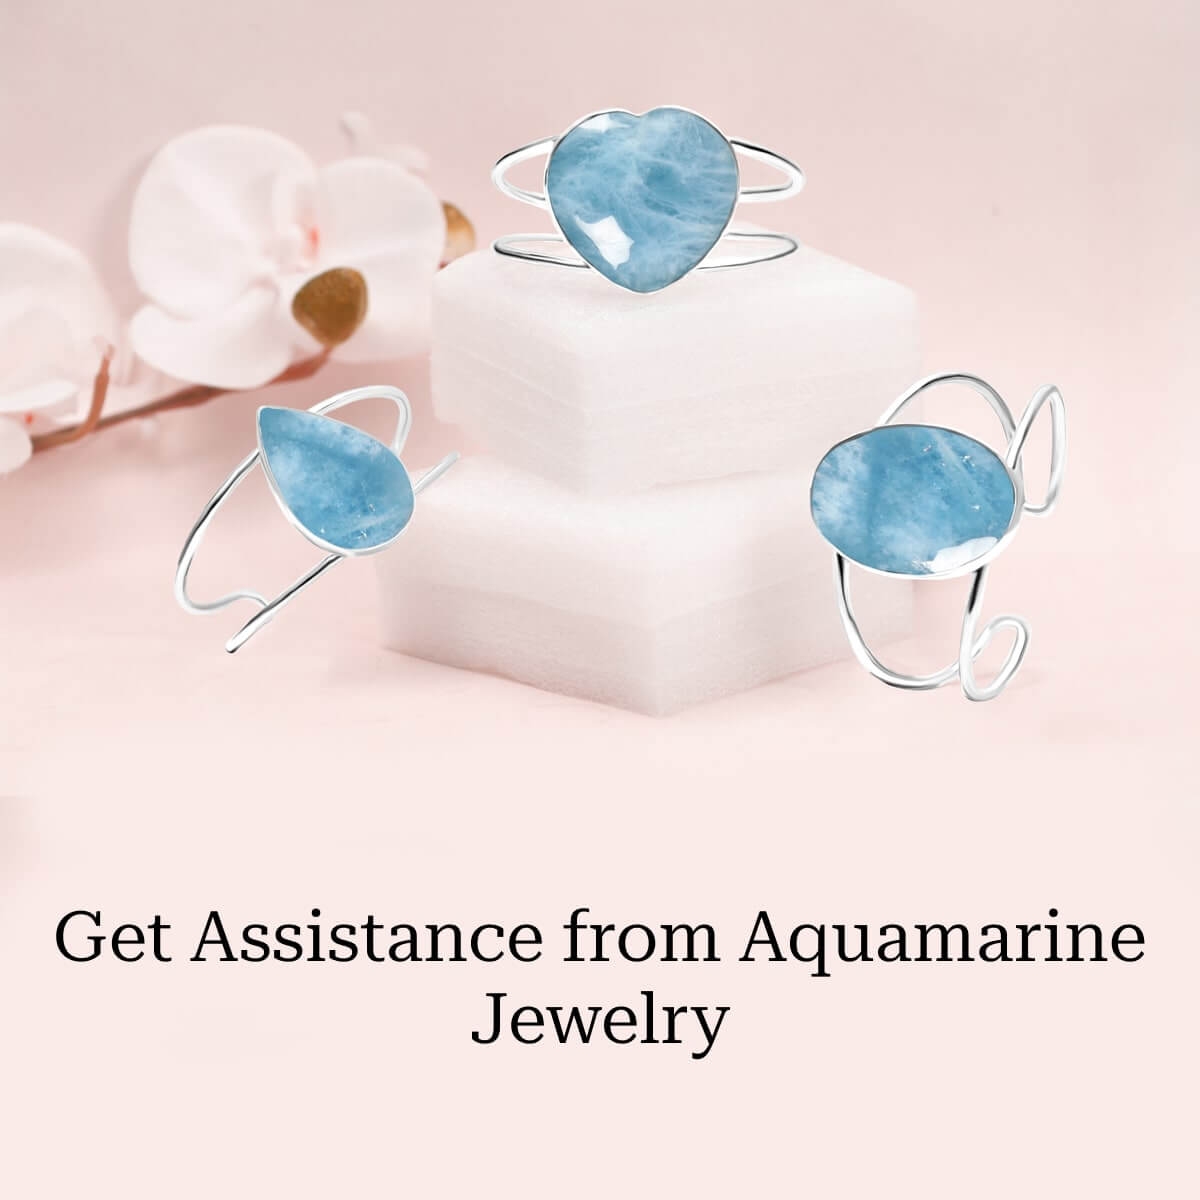 5 Surprising Benefits of Wearing Aquamarine Stone | by Govind saini | Medium